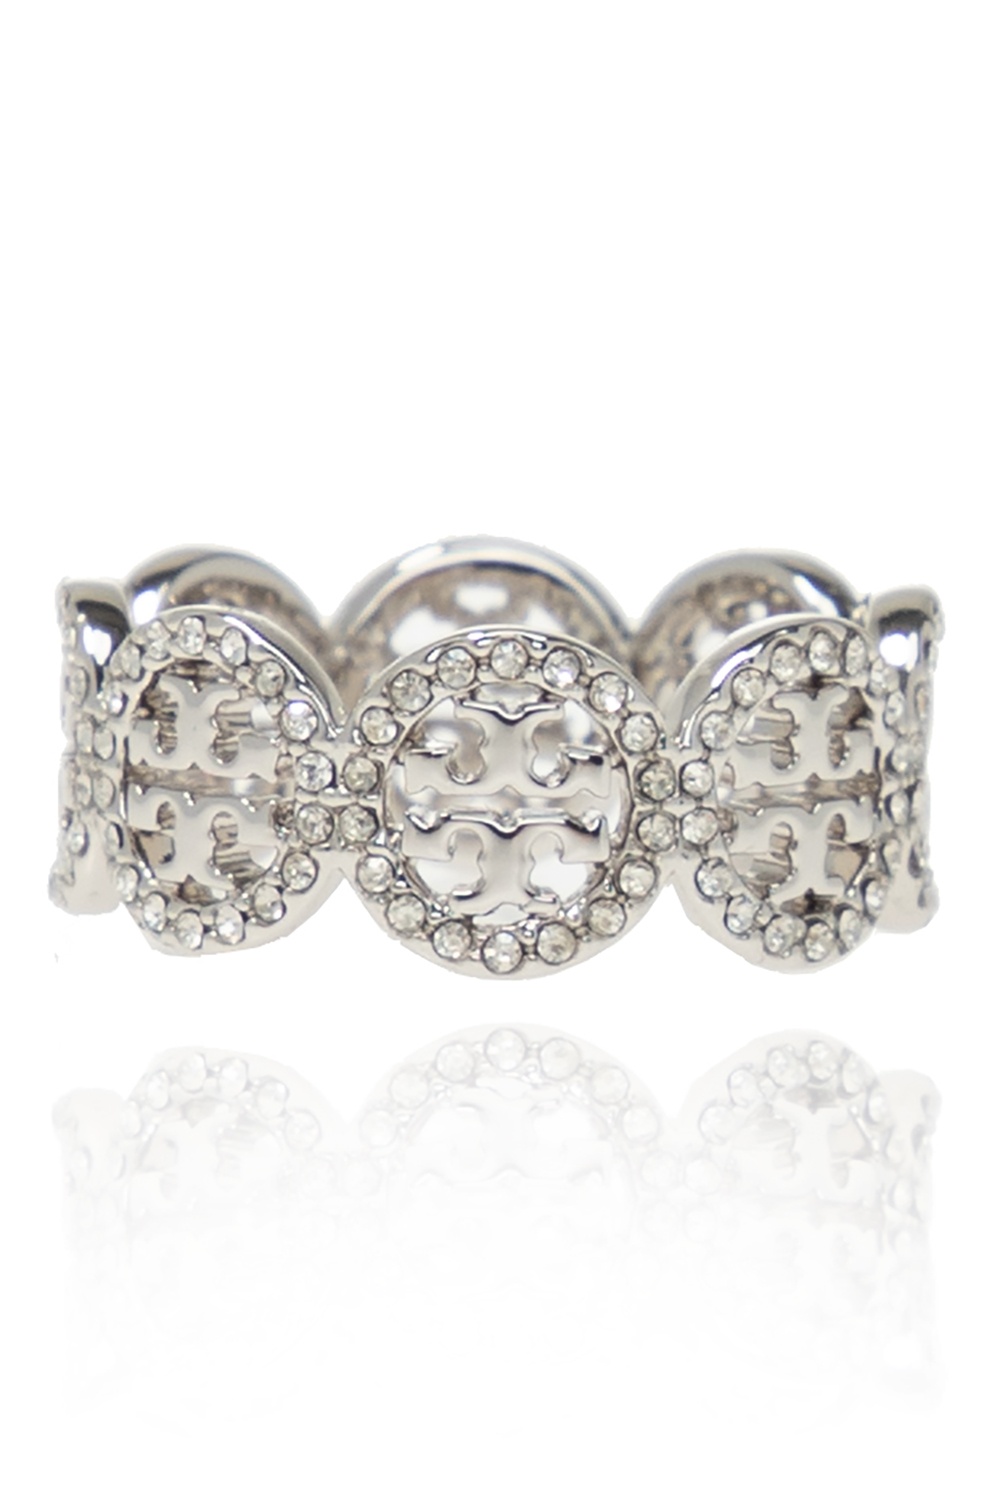 Tory Burch Ring with Swarovski crystals | Women's Jewelery | Vitkac